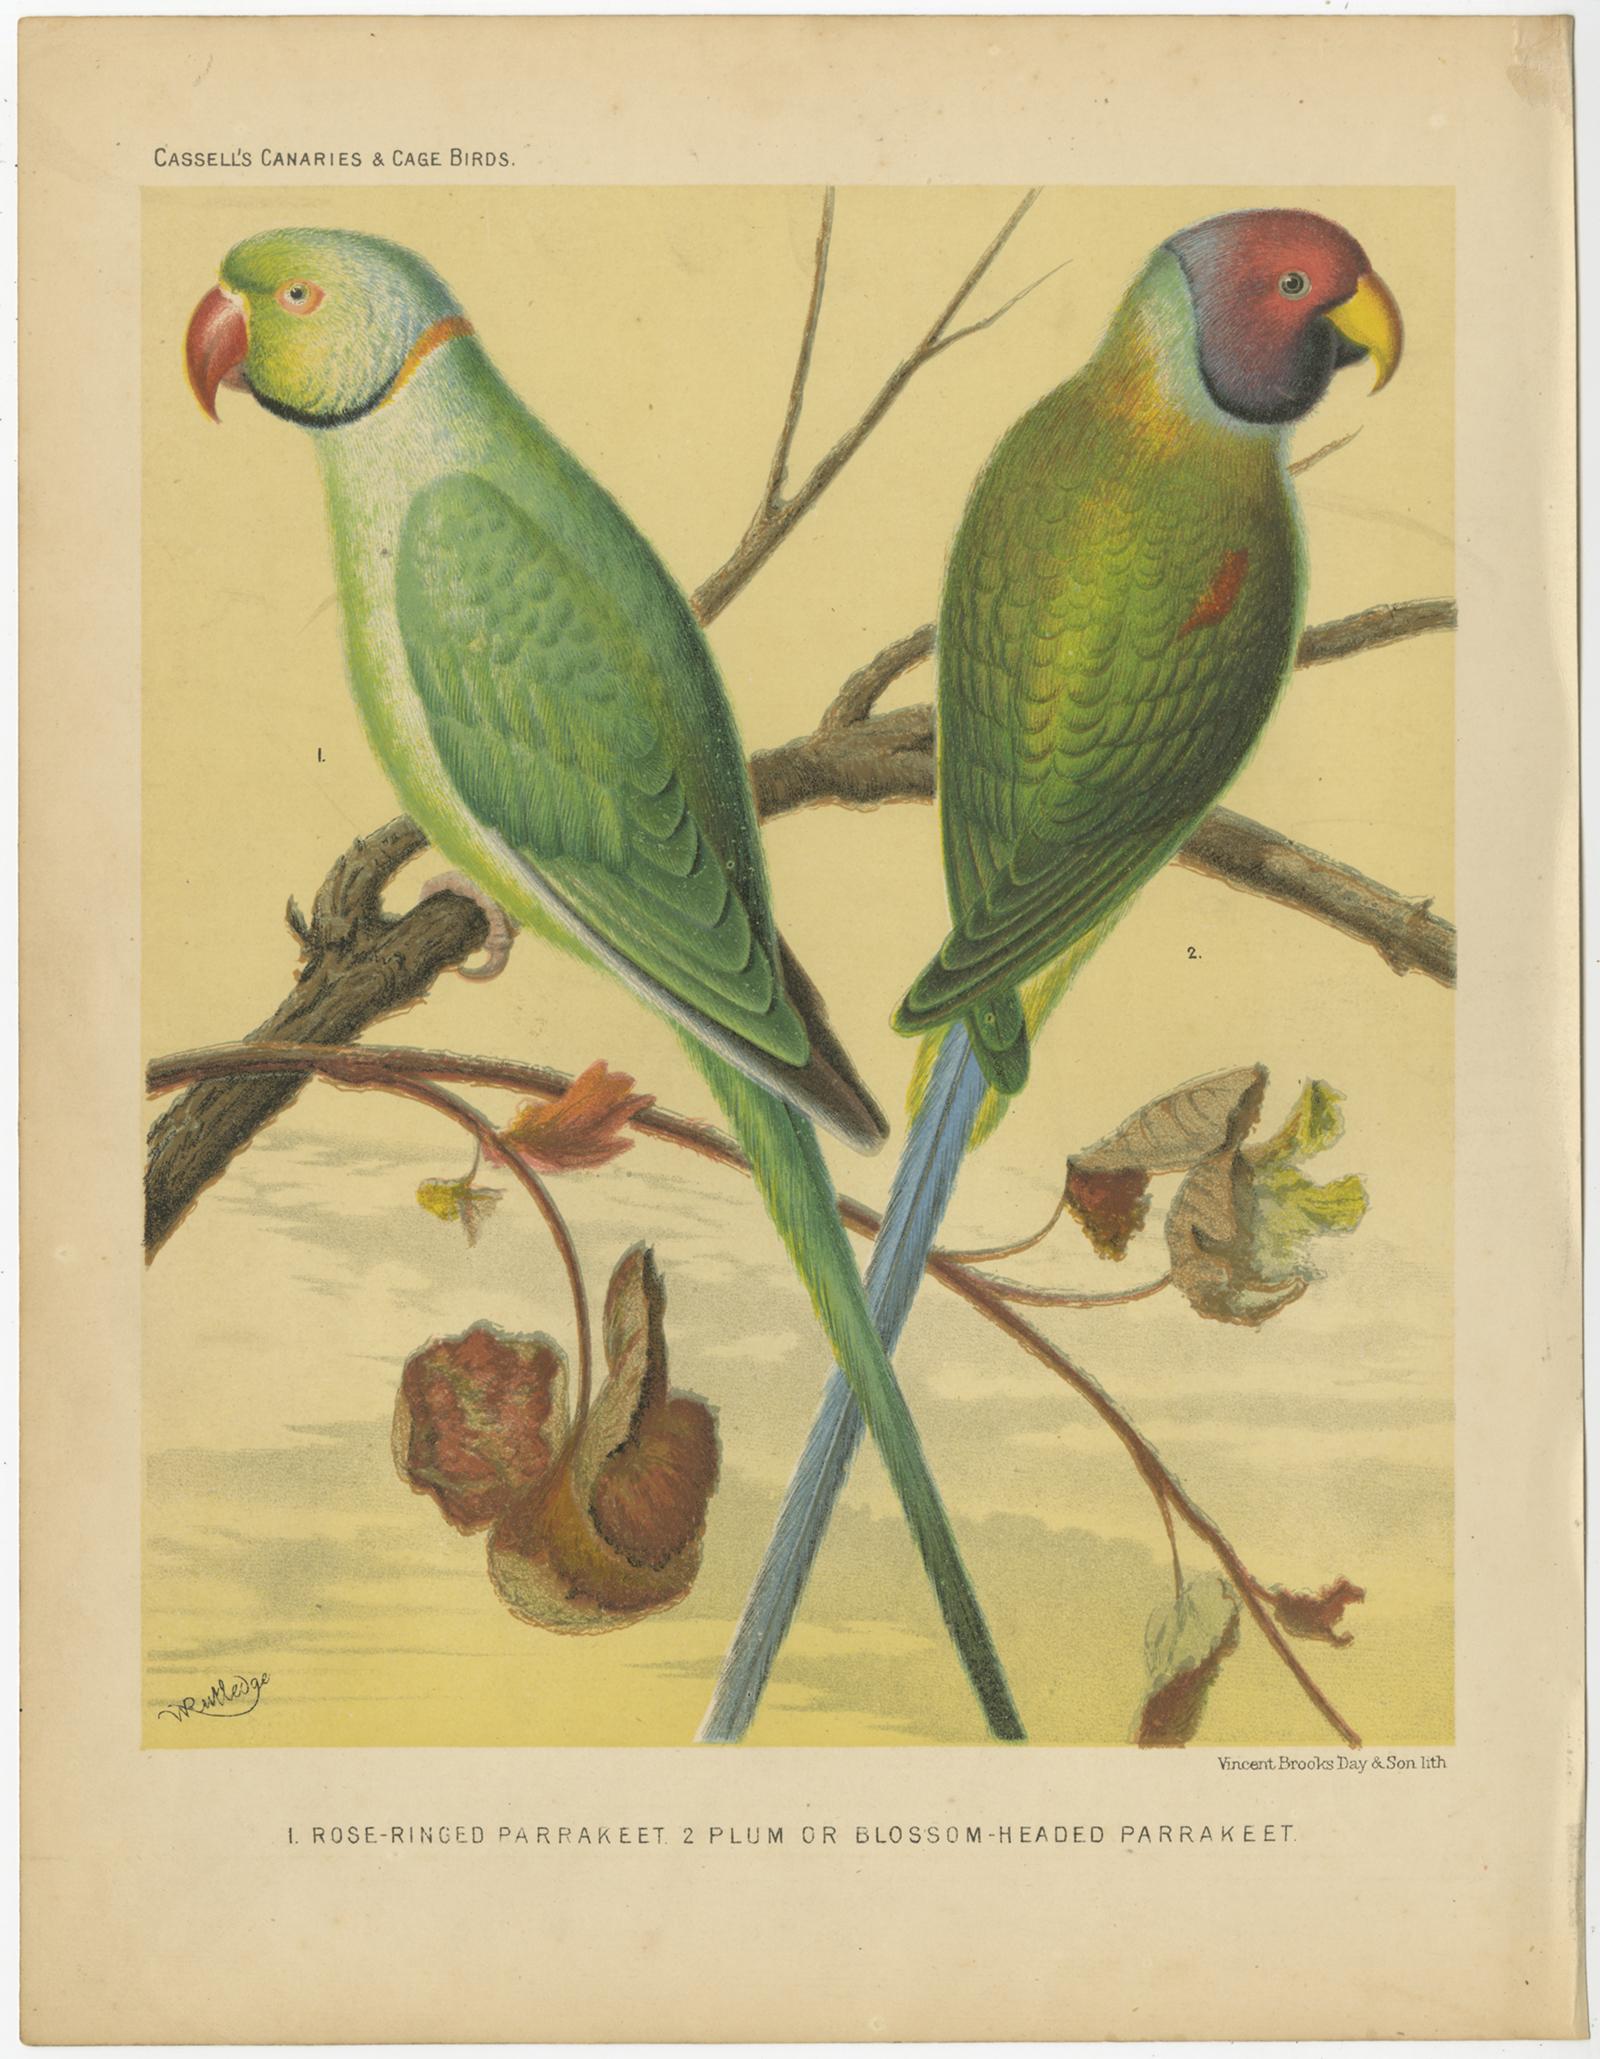 Antique bird print titled '1. Rose-Ringed Parrakeet. 2. Plum or Blossom-Headed Parrakeet.' Old bird print depicting the Rose-ringed parakeet (Psittacula krameri), also known as the Ring-necked Parakeet, The Blossom-Headed Parakeet (Psittacula